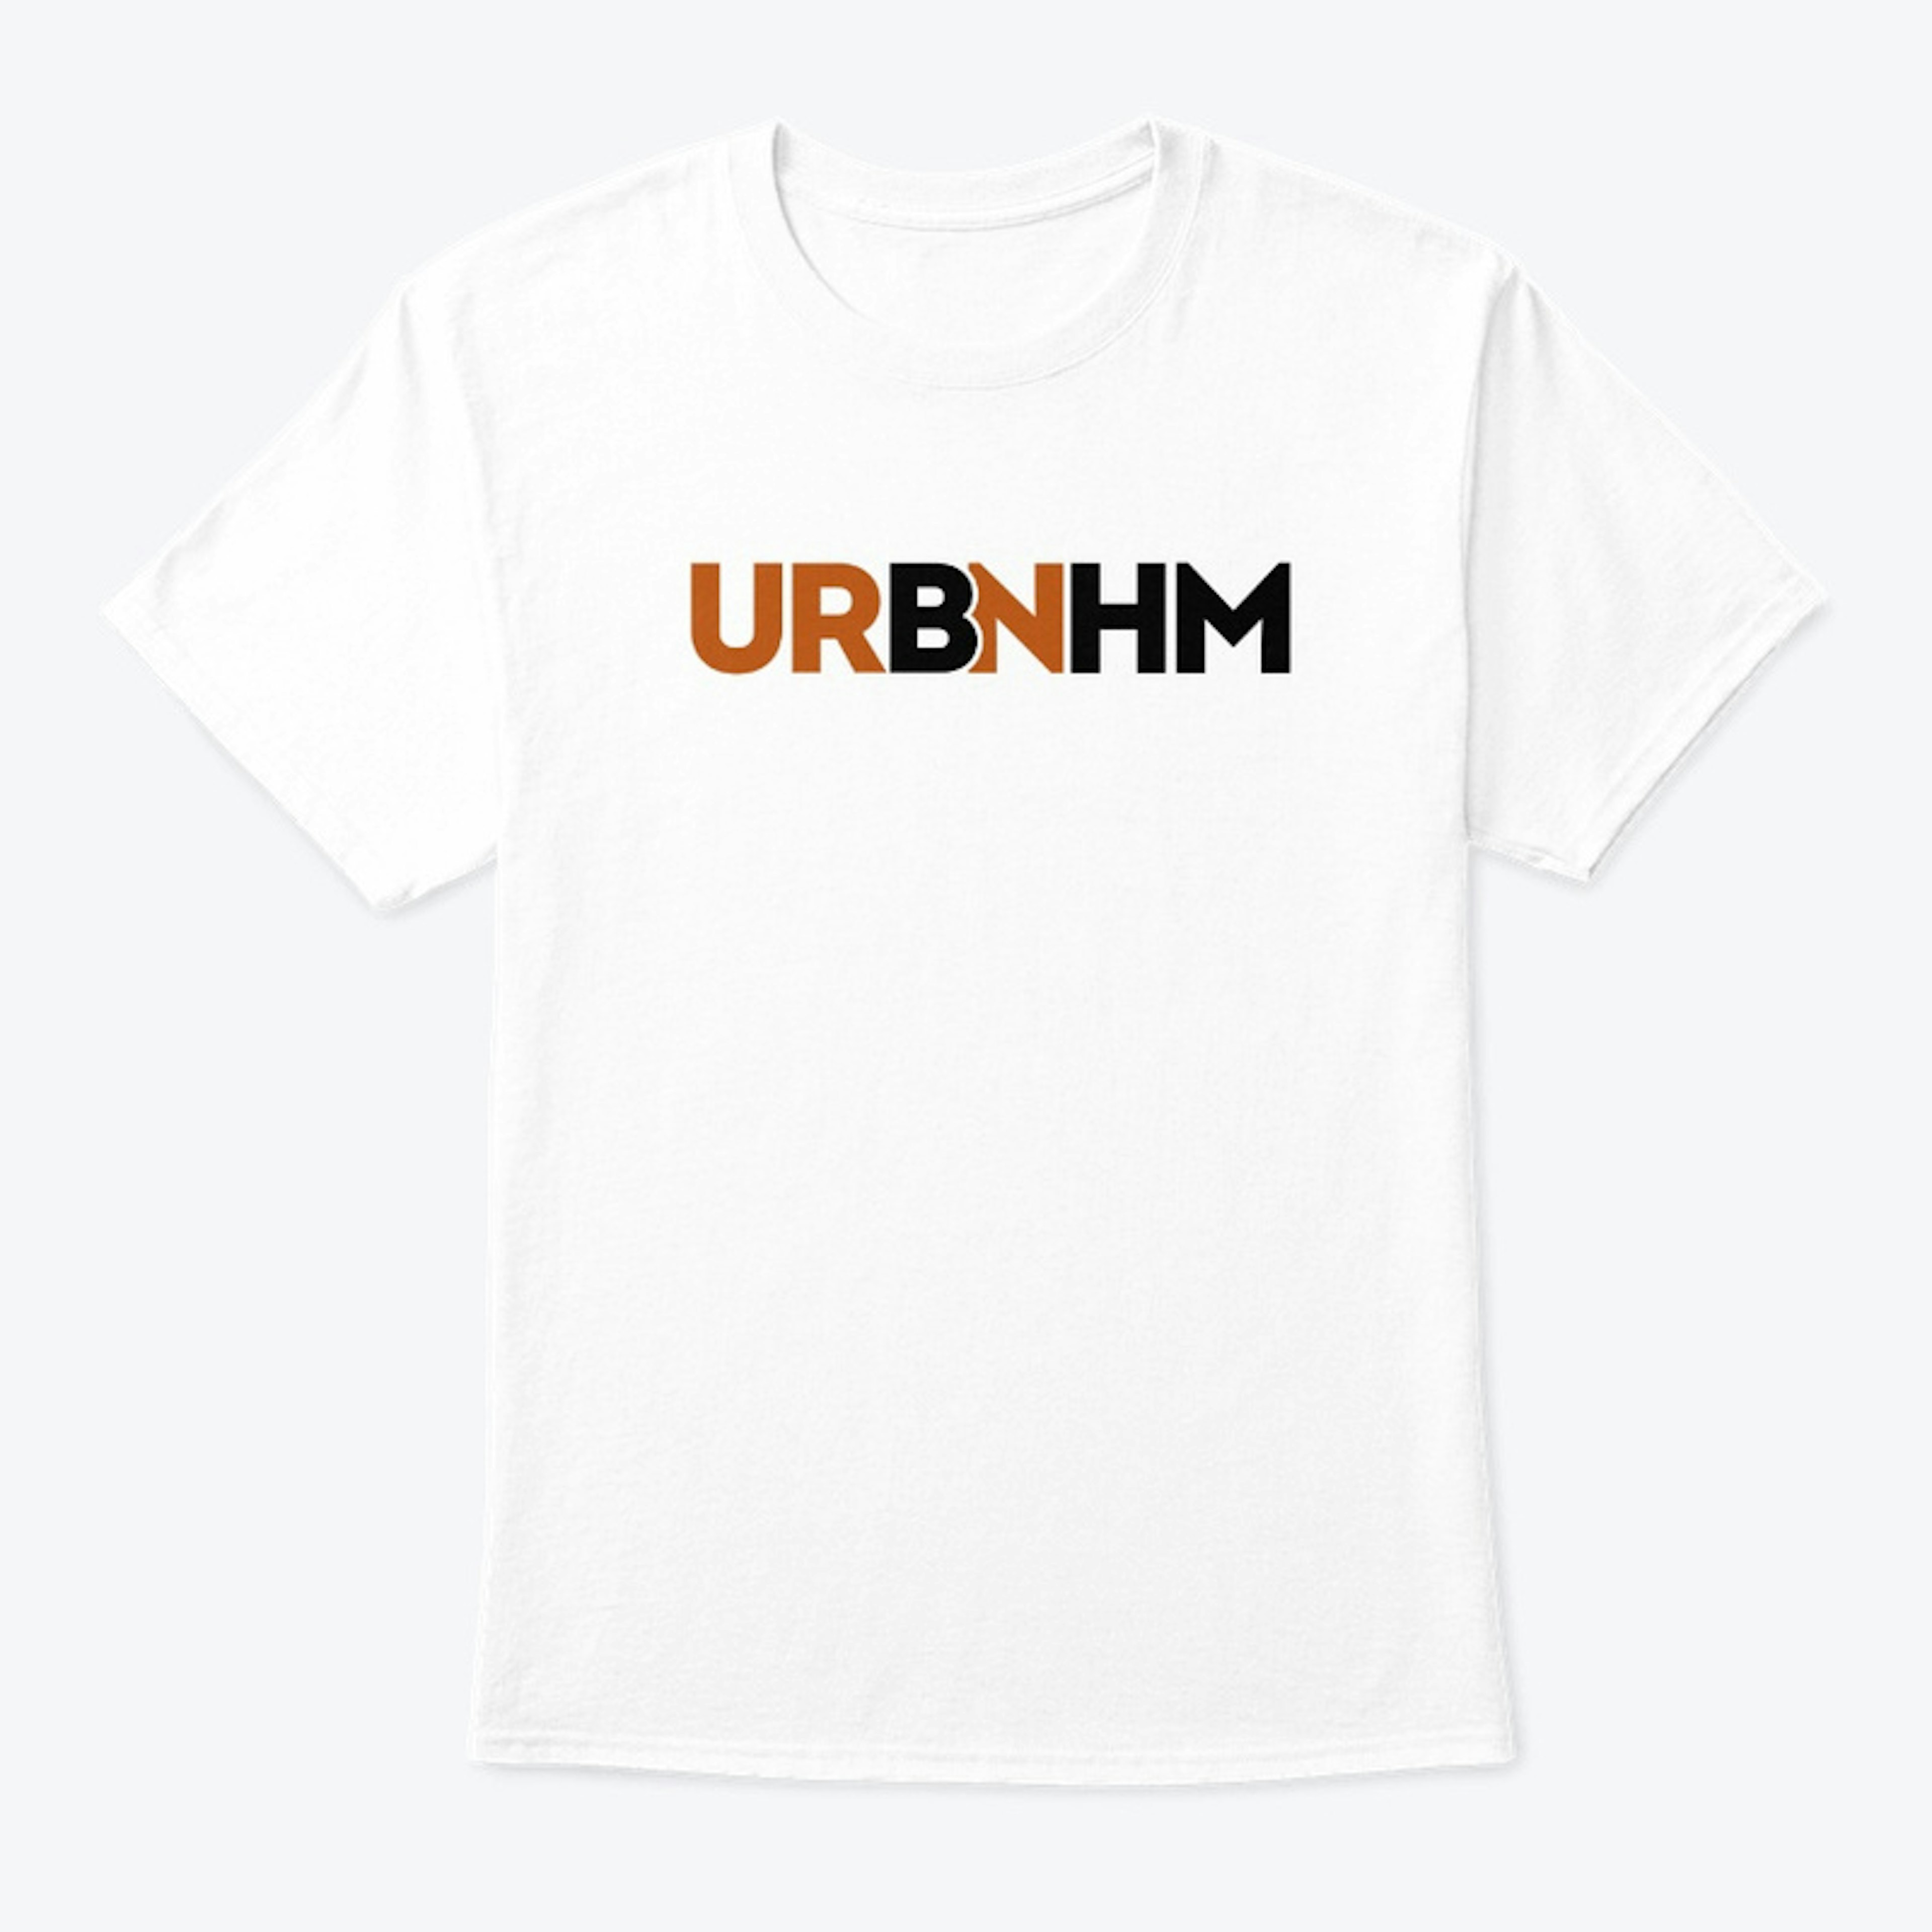 URBNHM - White Comfort Tee